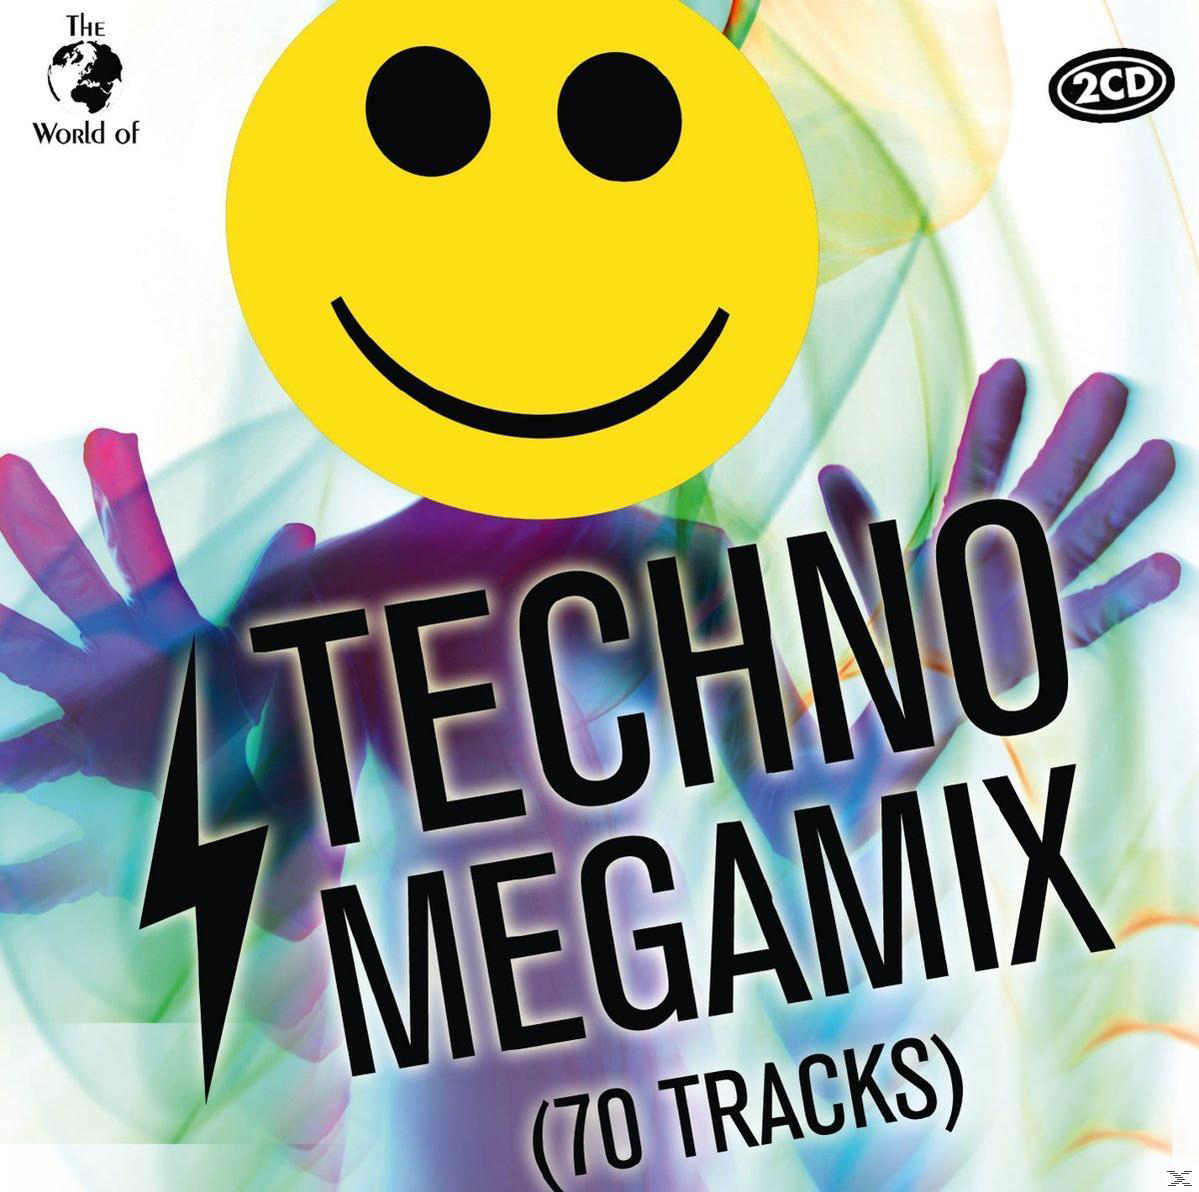 Tracks) Megamix - (65 (CD) VARIOUS - Techno